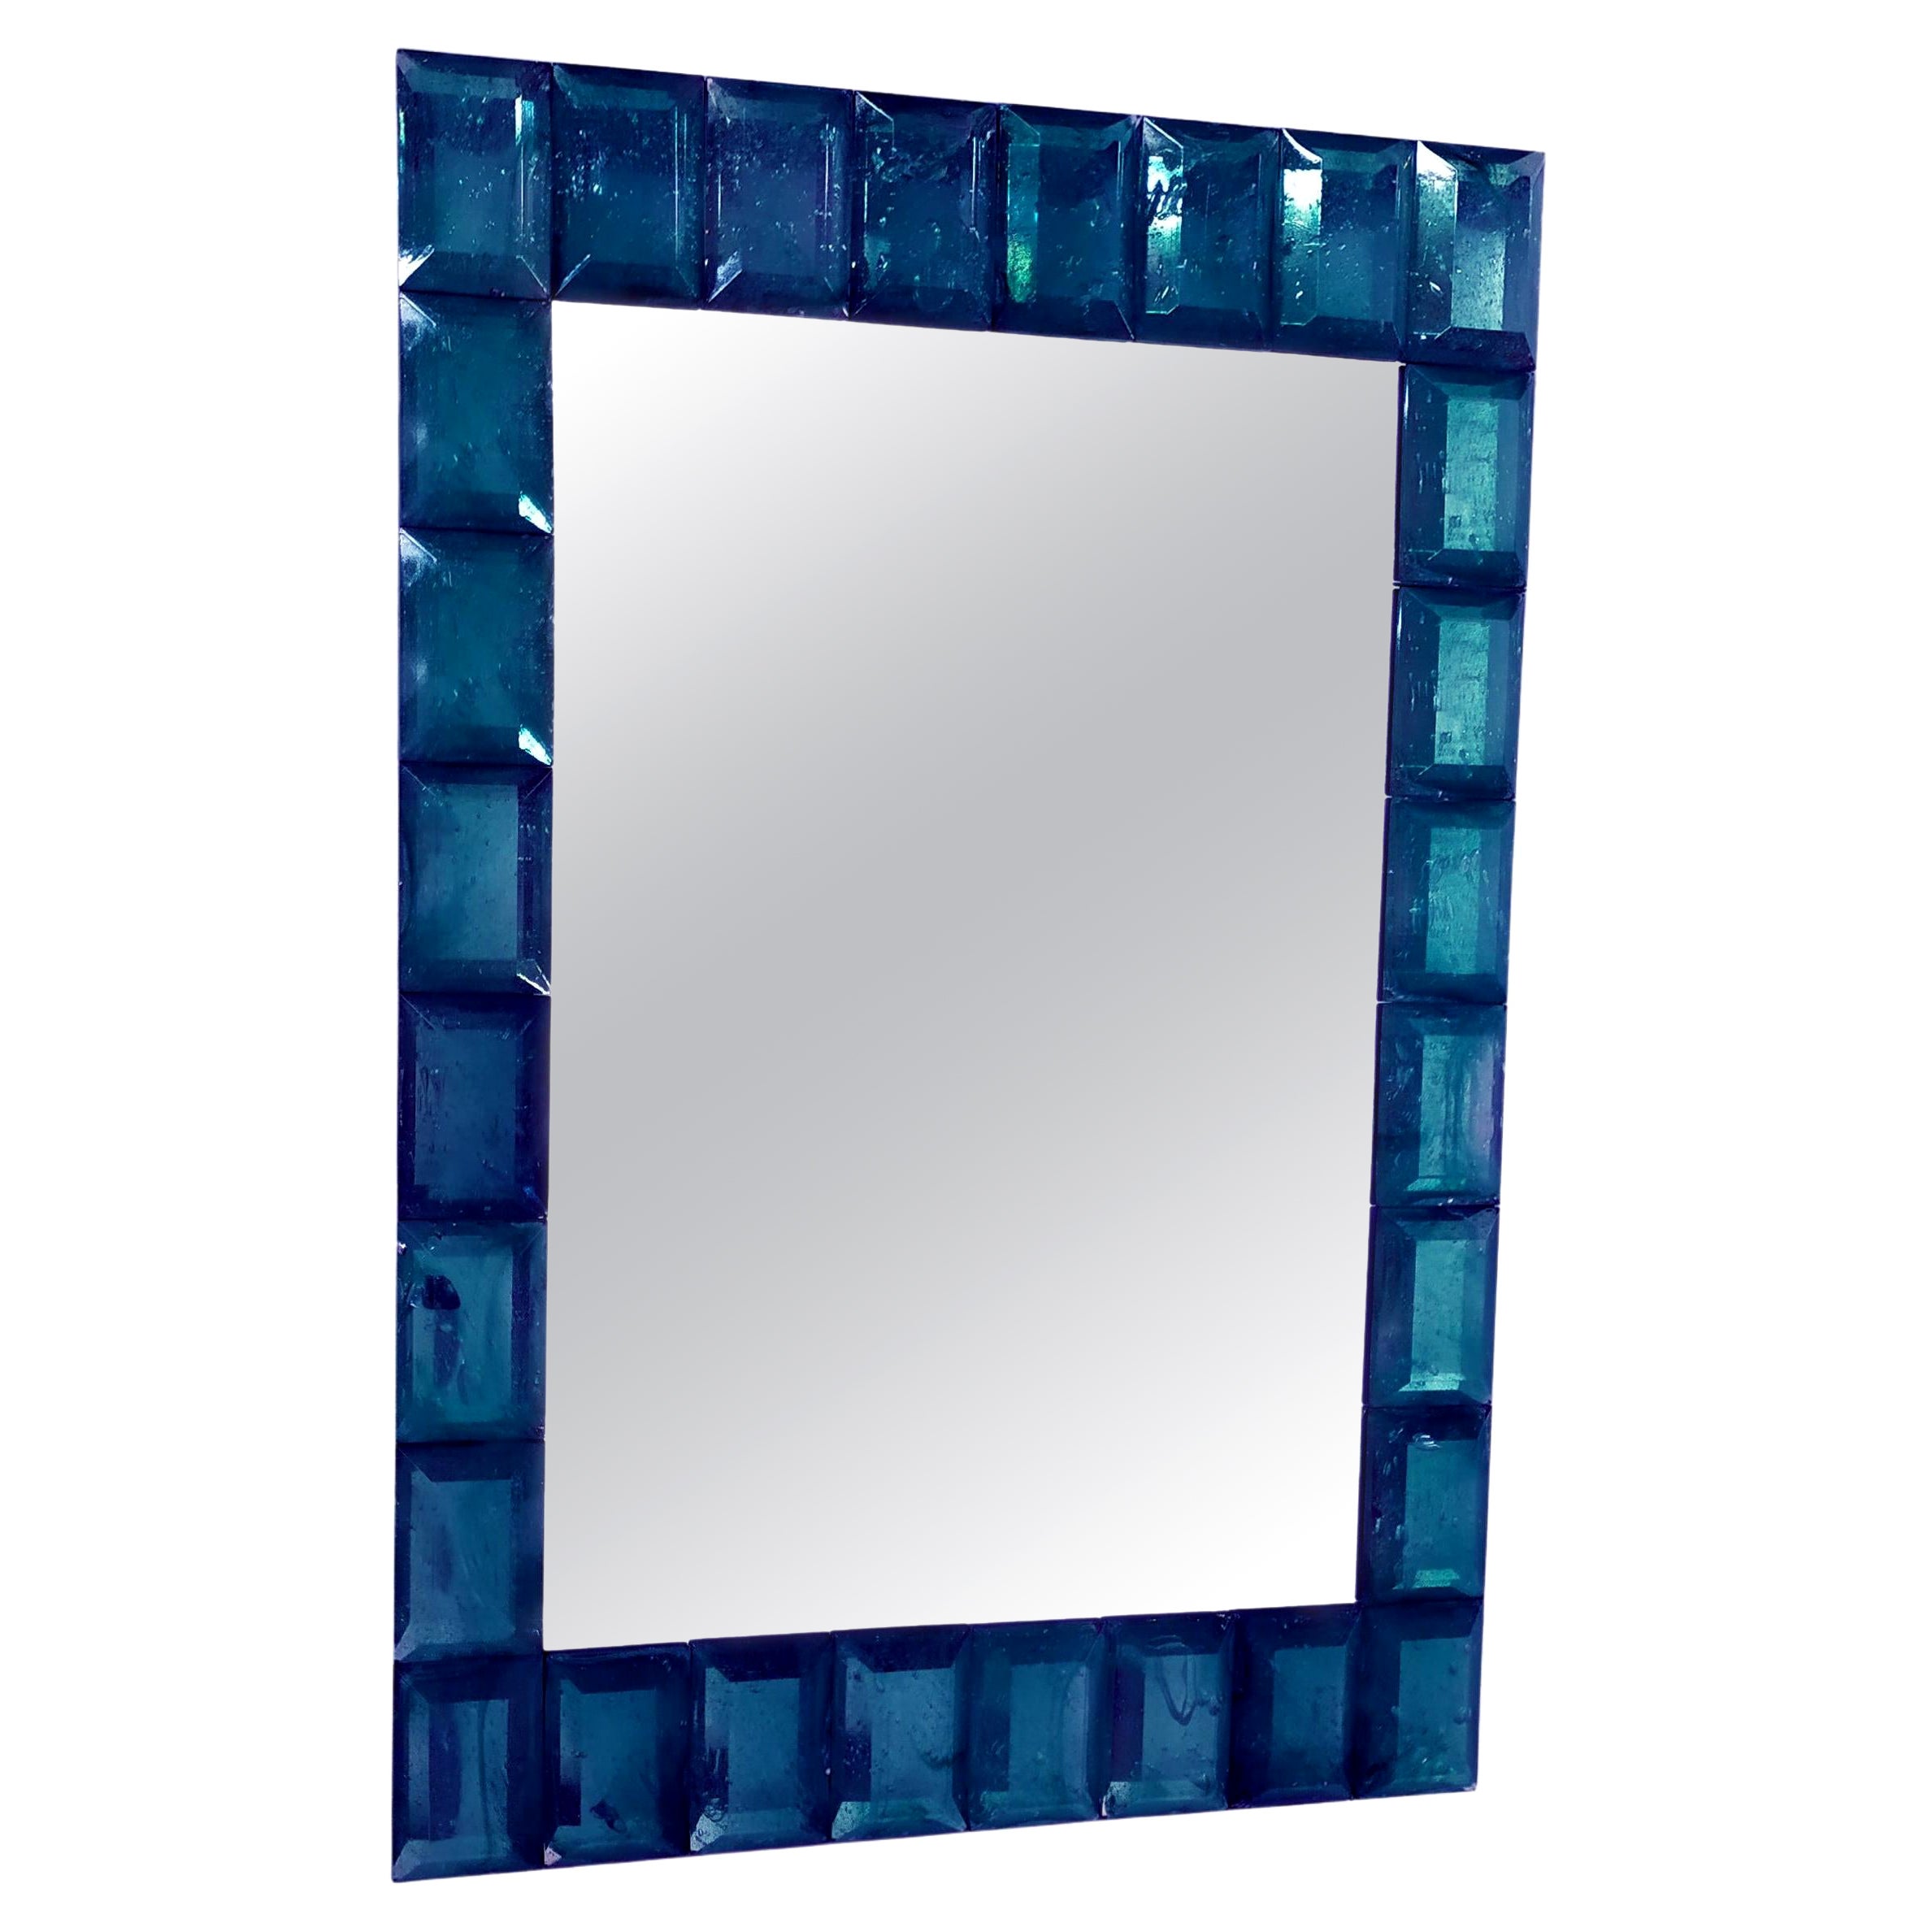 "Sapphire" Murano Glass Mirror in Contemporary Style by Fratelli Tosi Murano